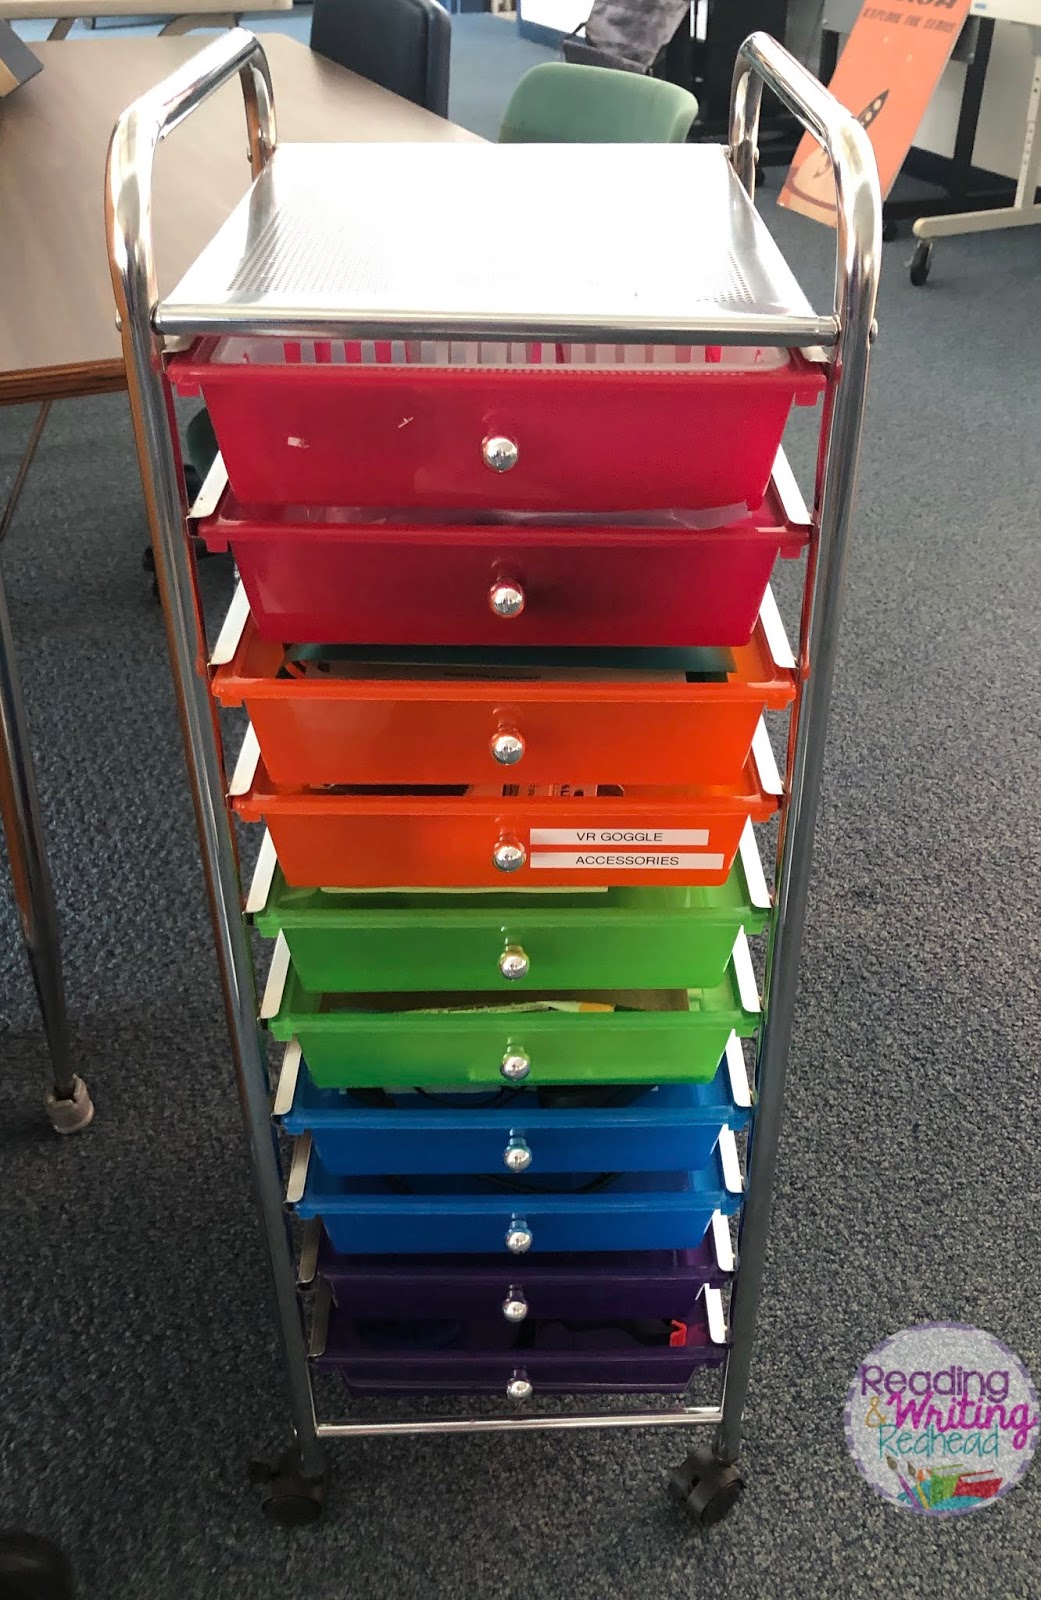 Rainbow cart for flexible seating organization